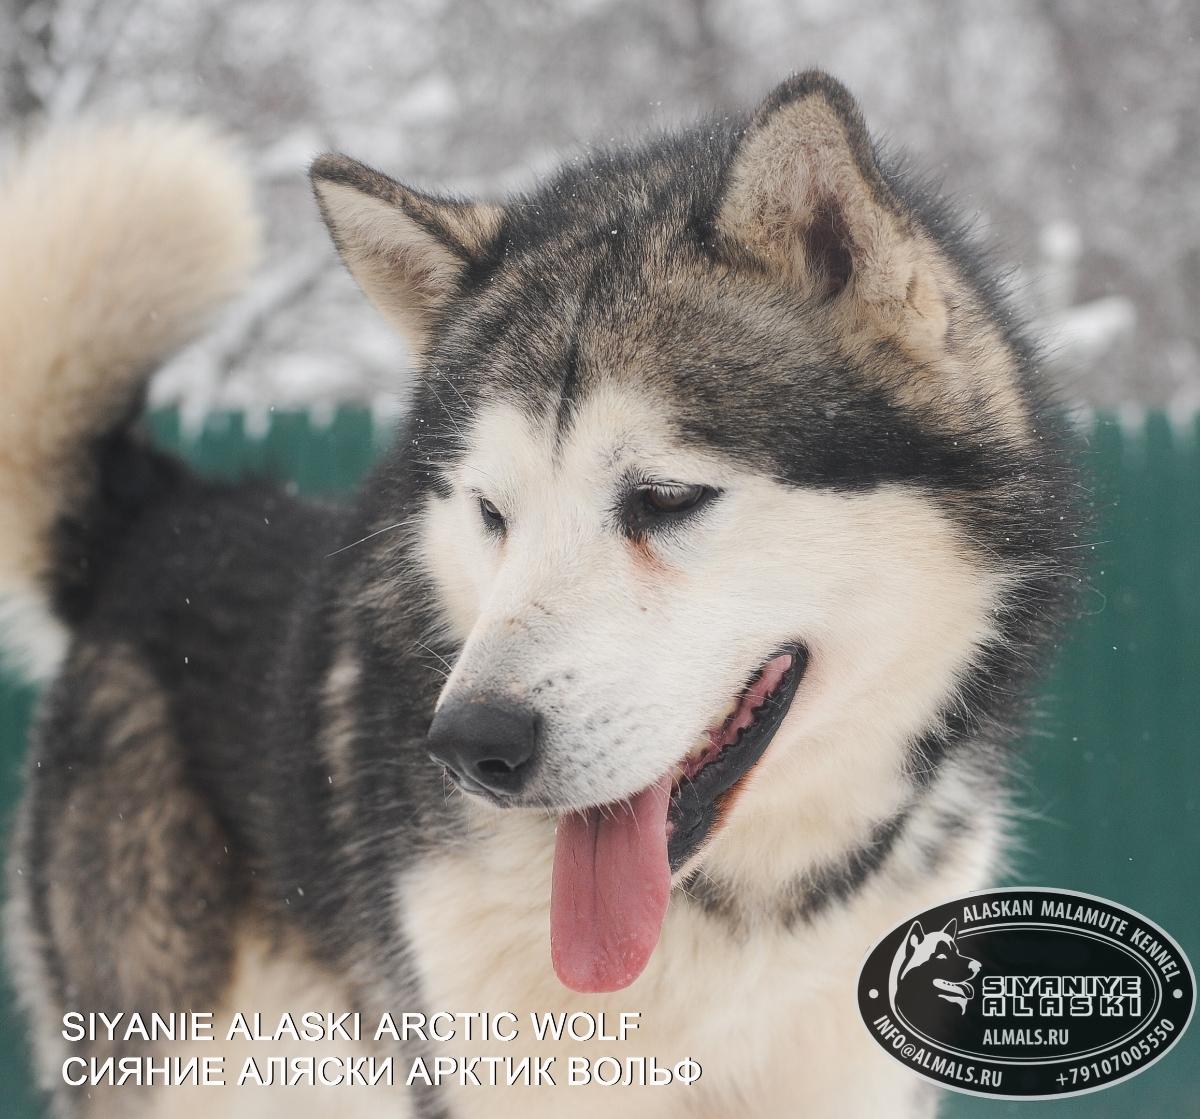 SIYANIYE ALASKI ARCTIC WOLF / Сияние Аляски Арктик Вольф,